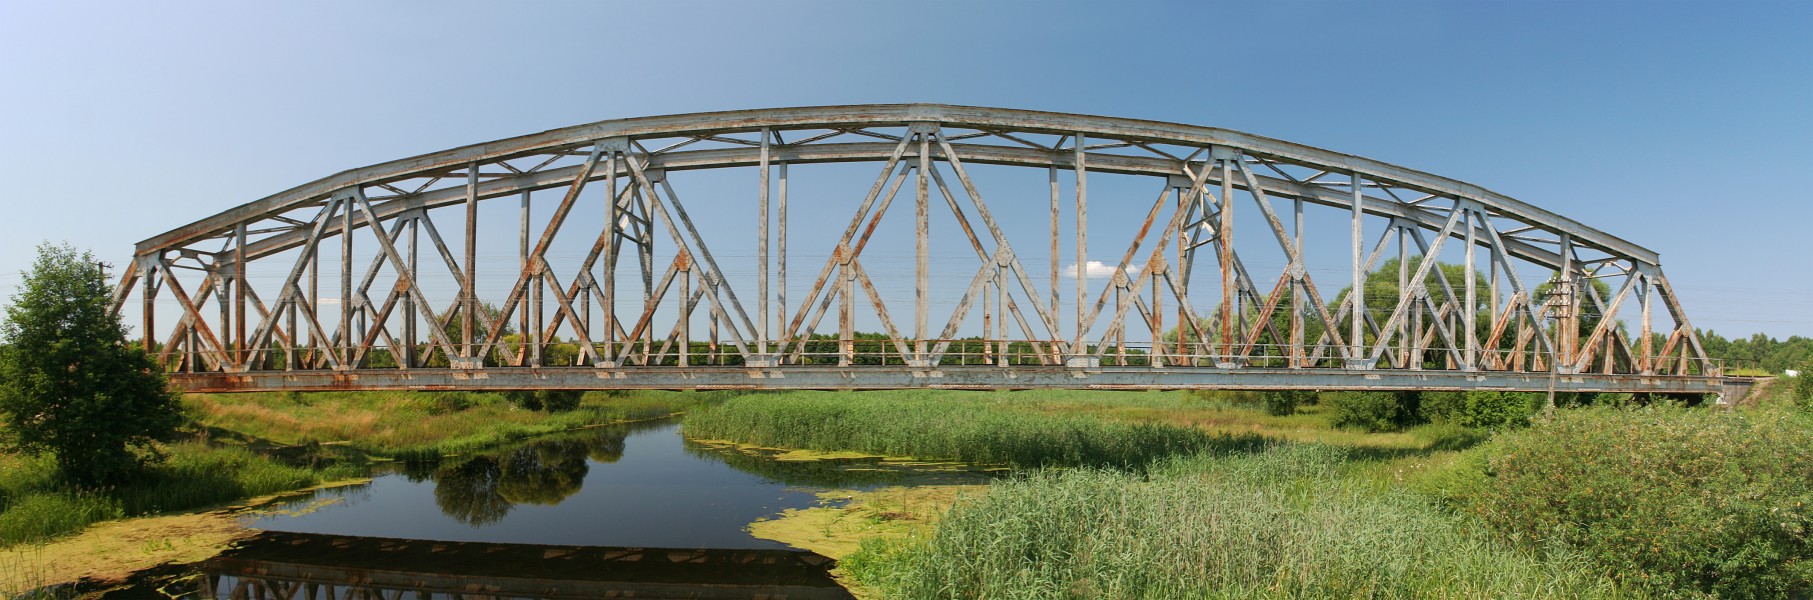 Biebrza - Rail bridge